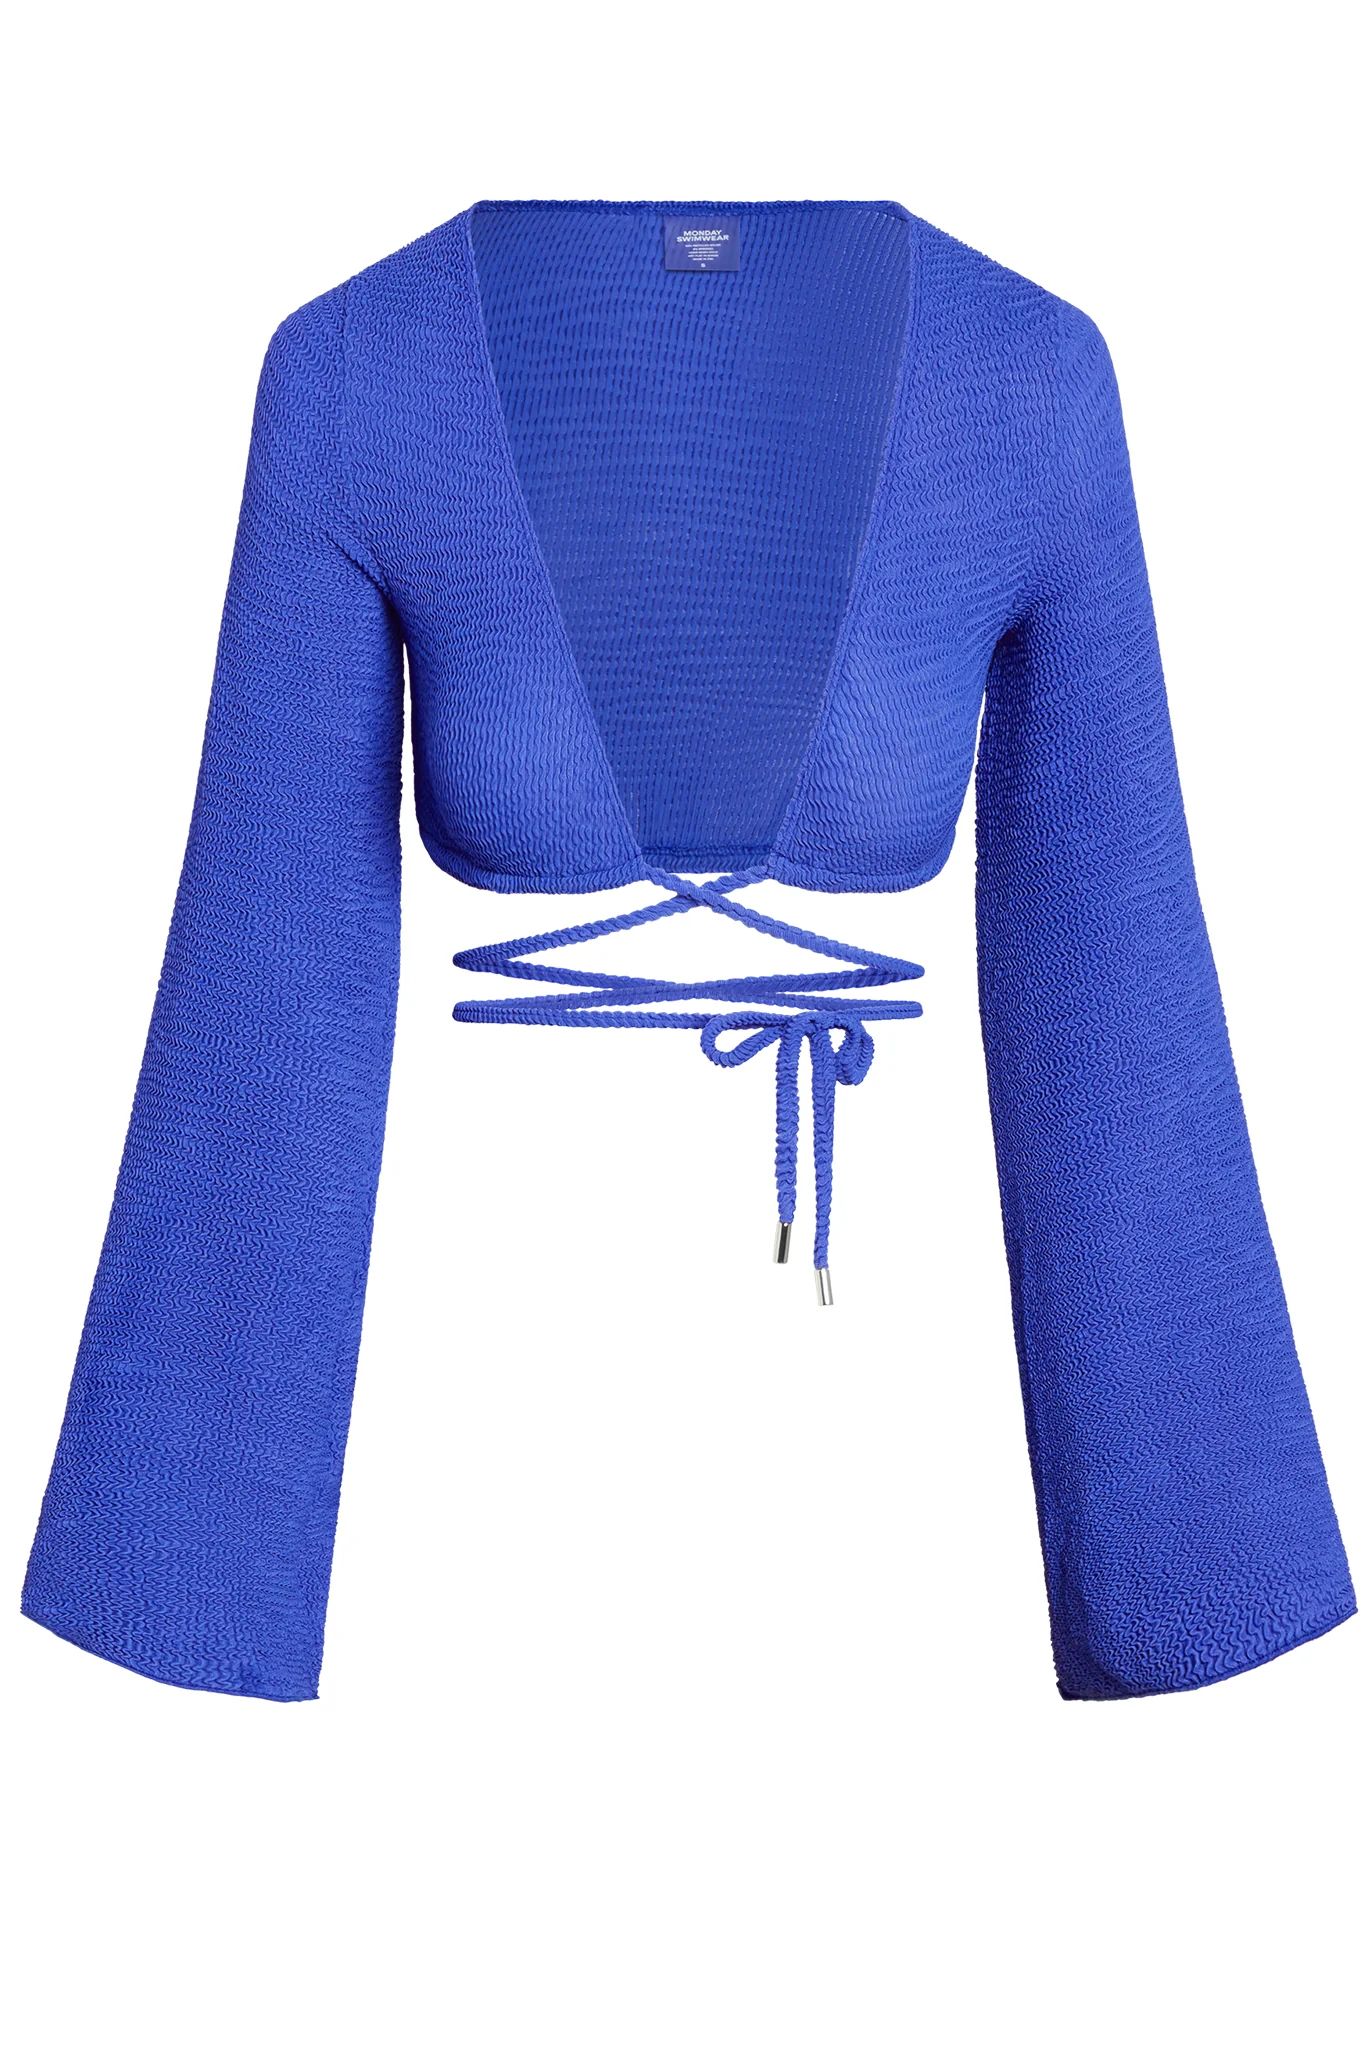 Azores Top - Cobalt Crinkle | Monday Swimwear